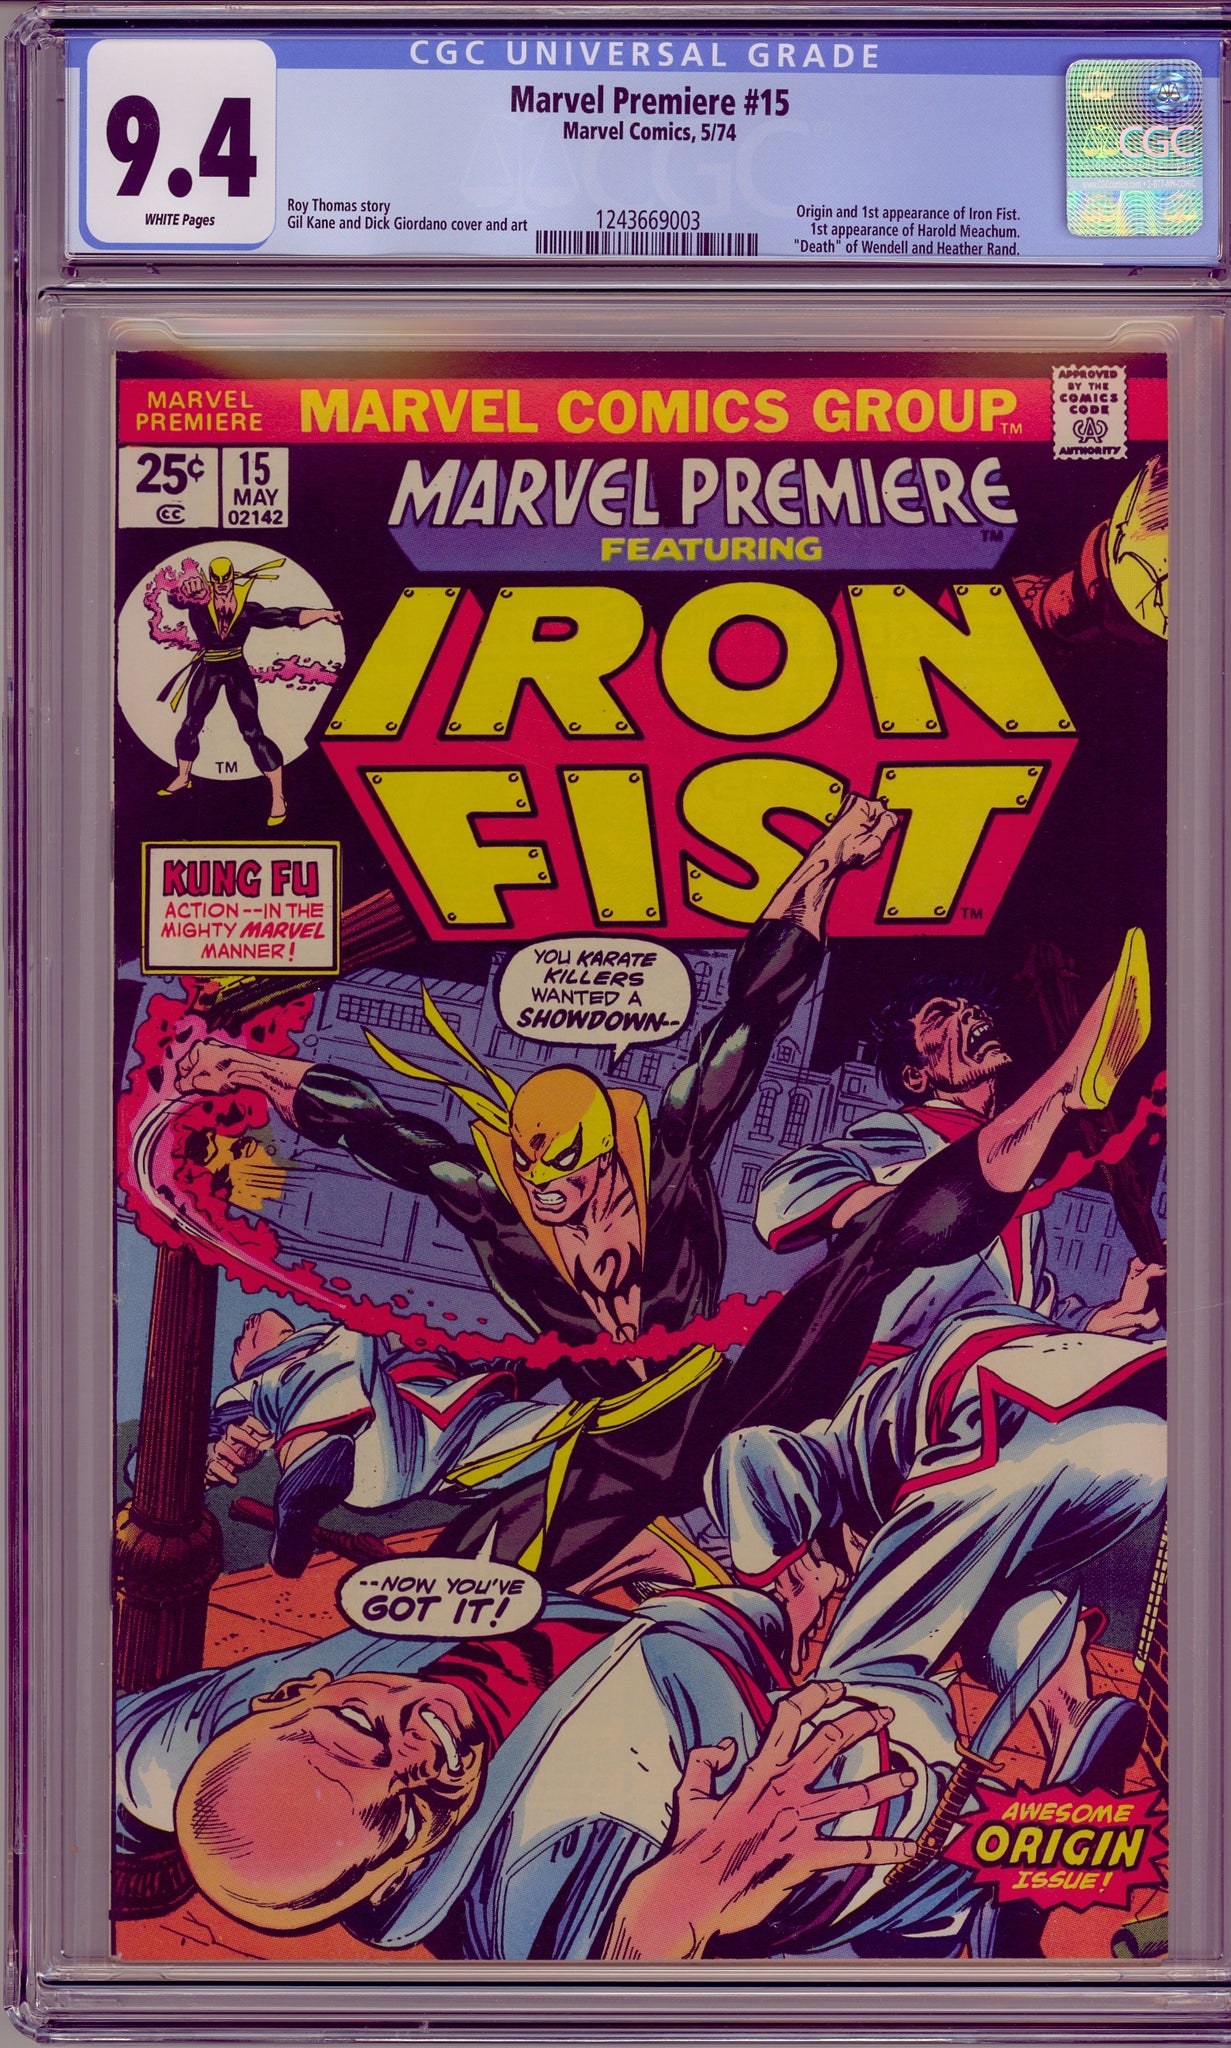 Marvel Premiere #15 (1974) Iron Fist